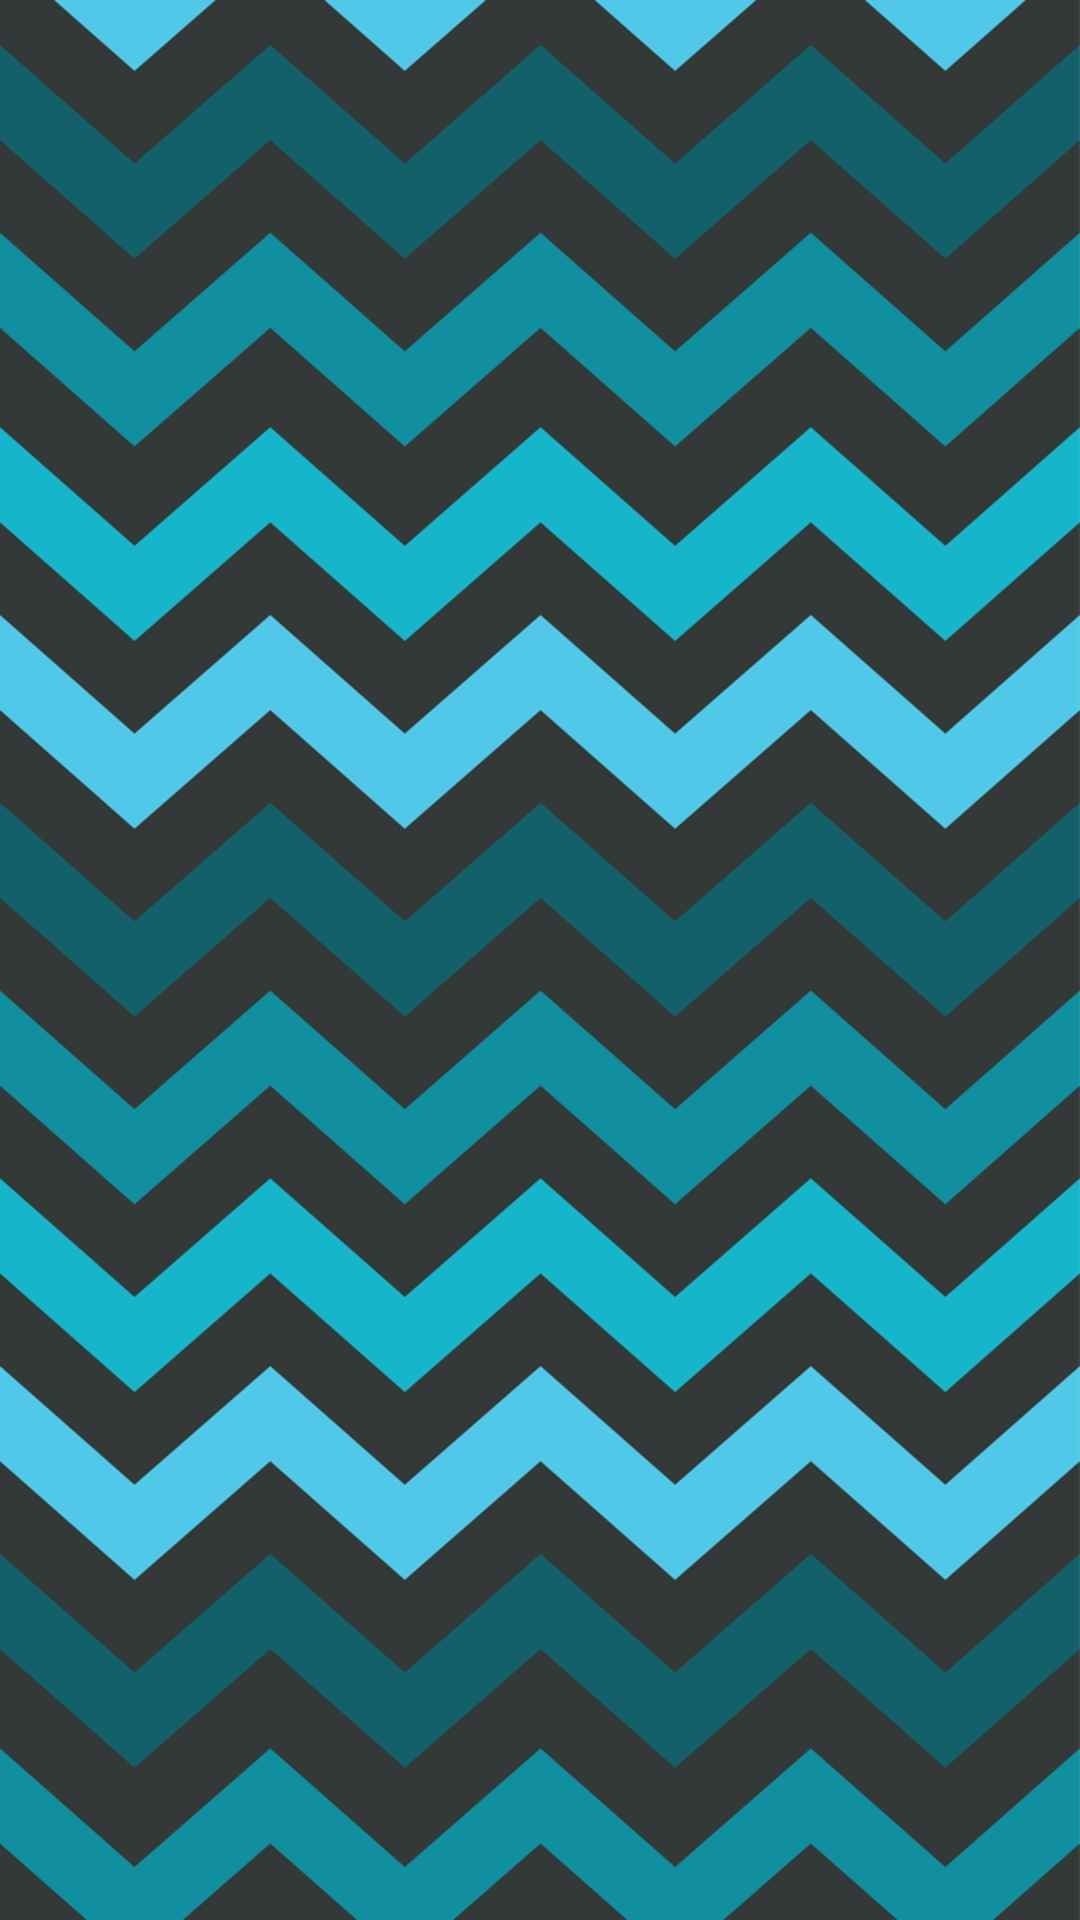 1080x1920 ...  Chevron Dim Blue and Black iPhone 6 Plus Wallpaper - Zigzag  Pattern, ...